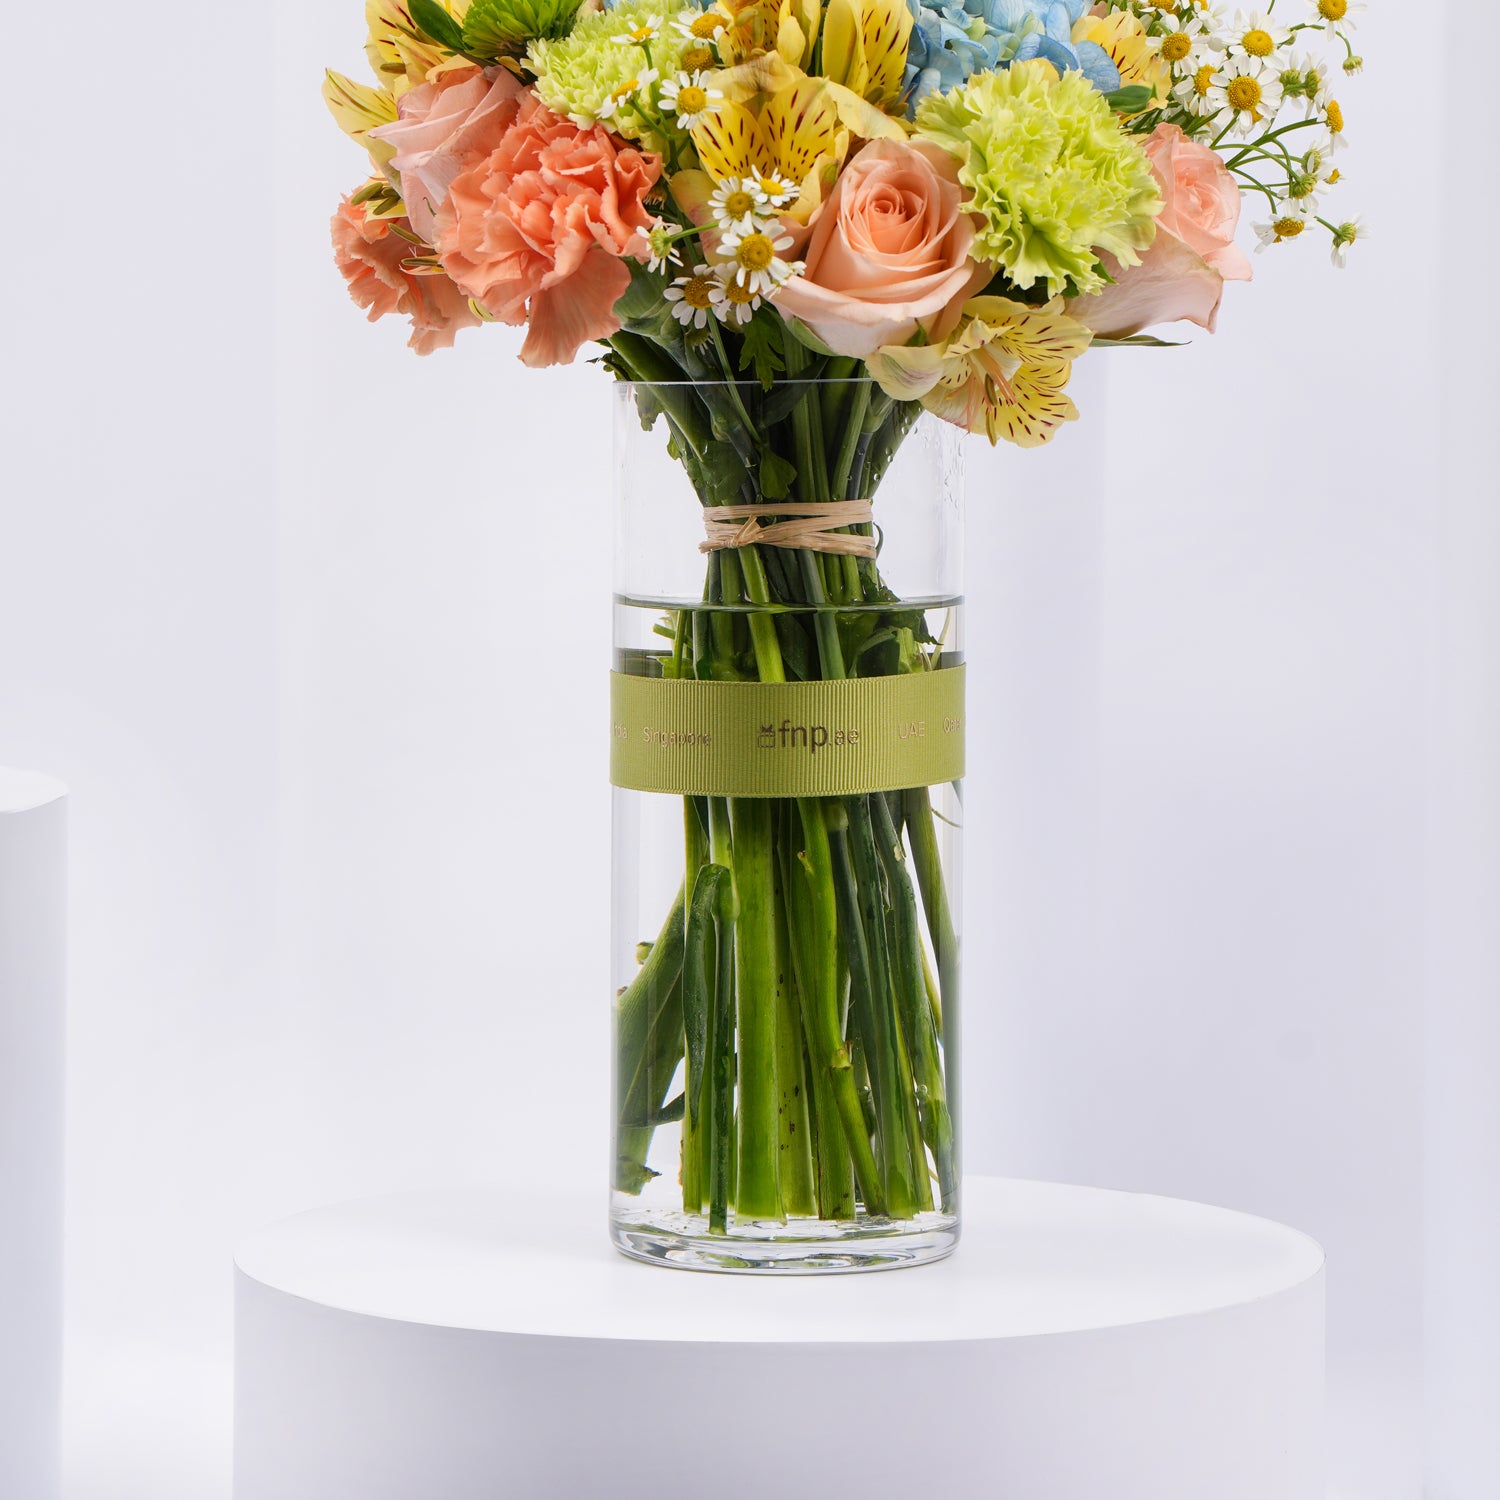 Mixed Flowers Vase Arrangement